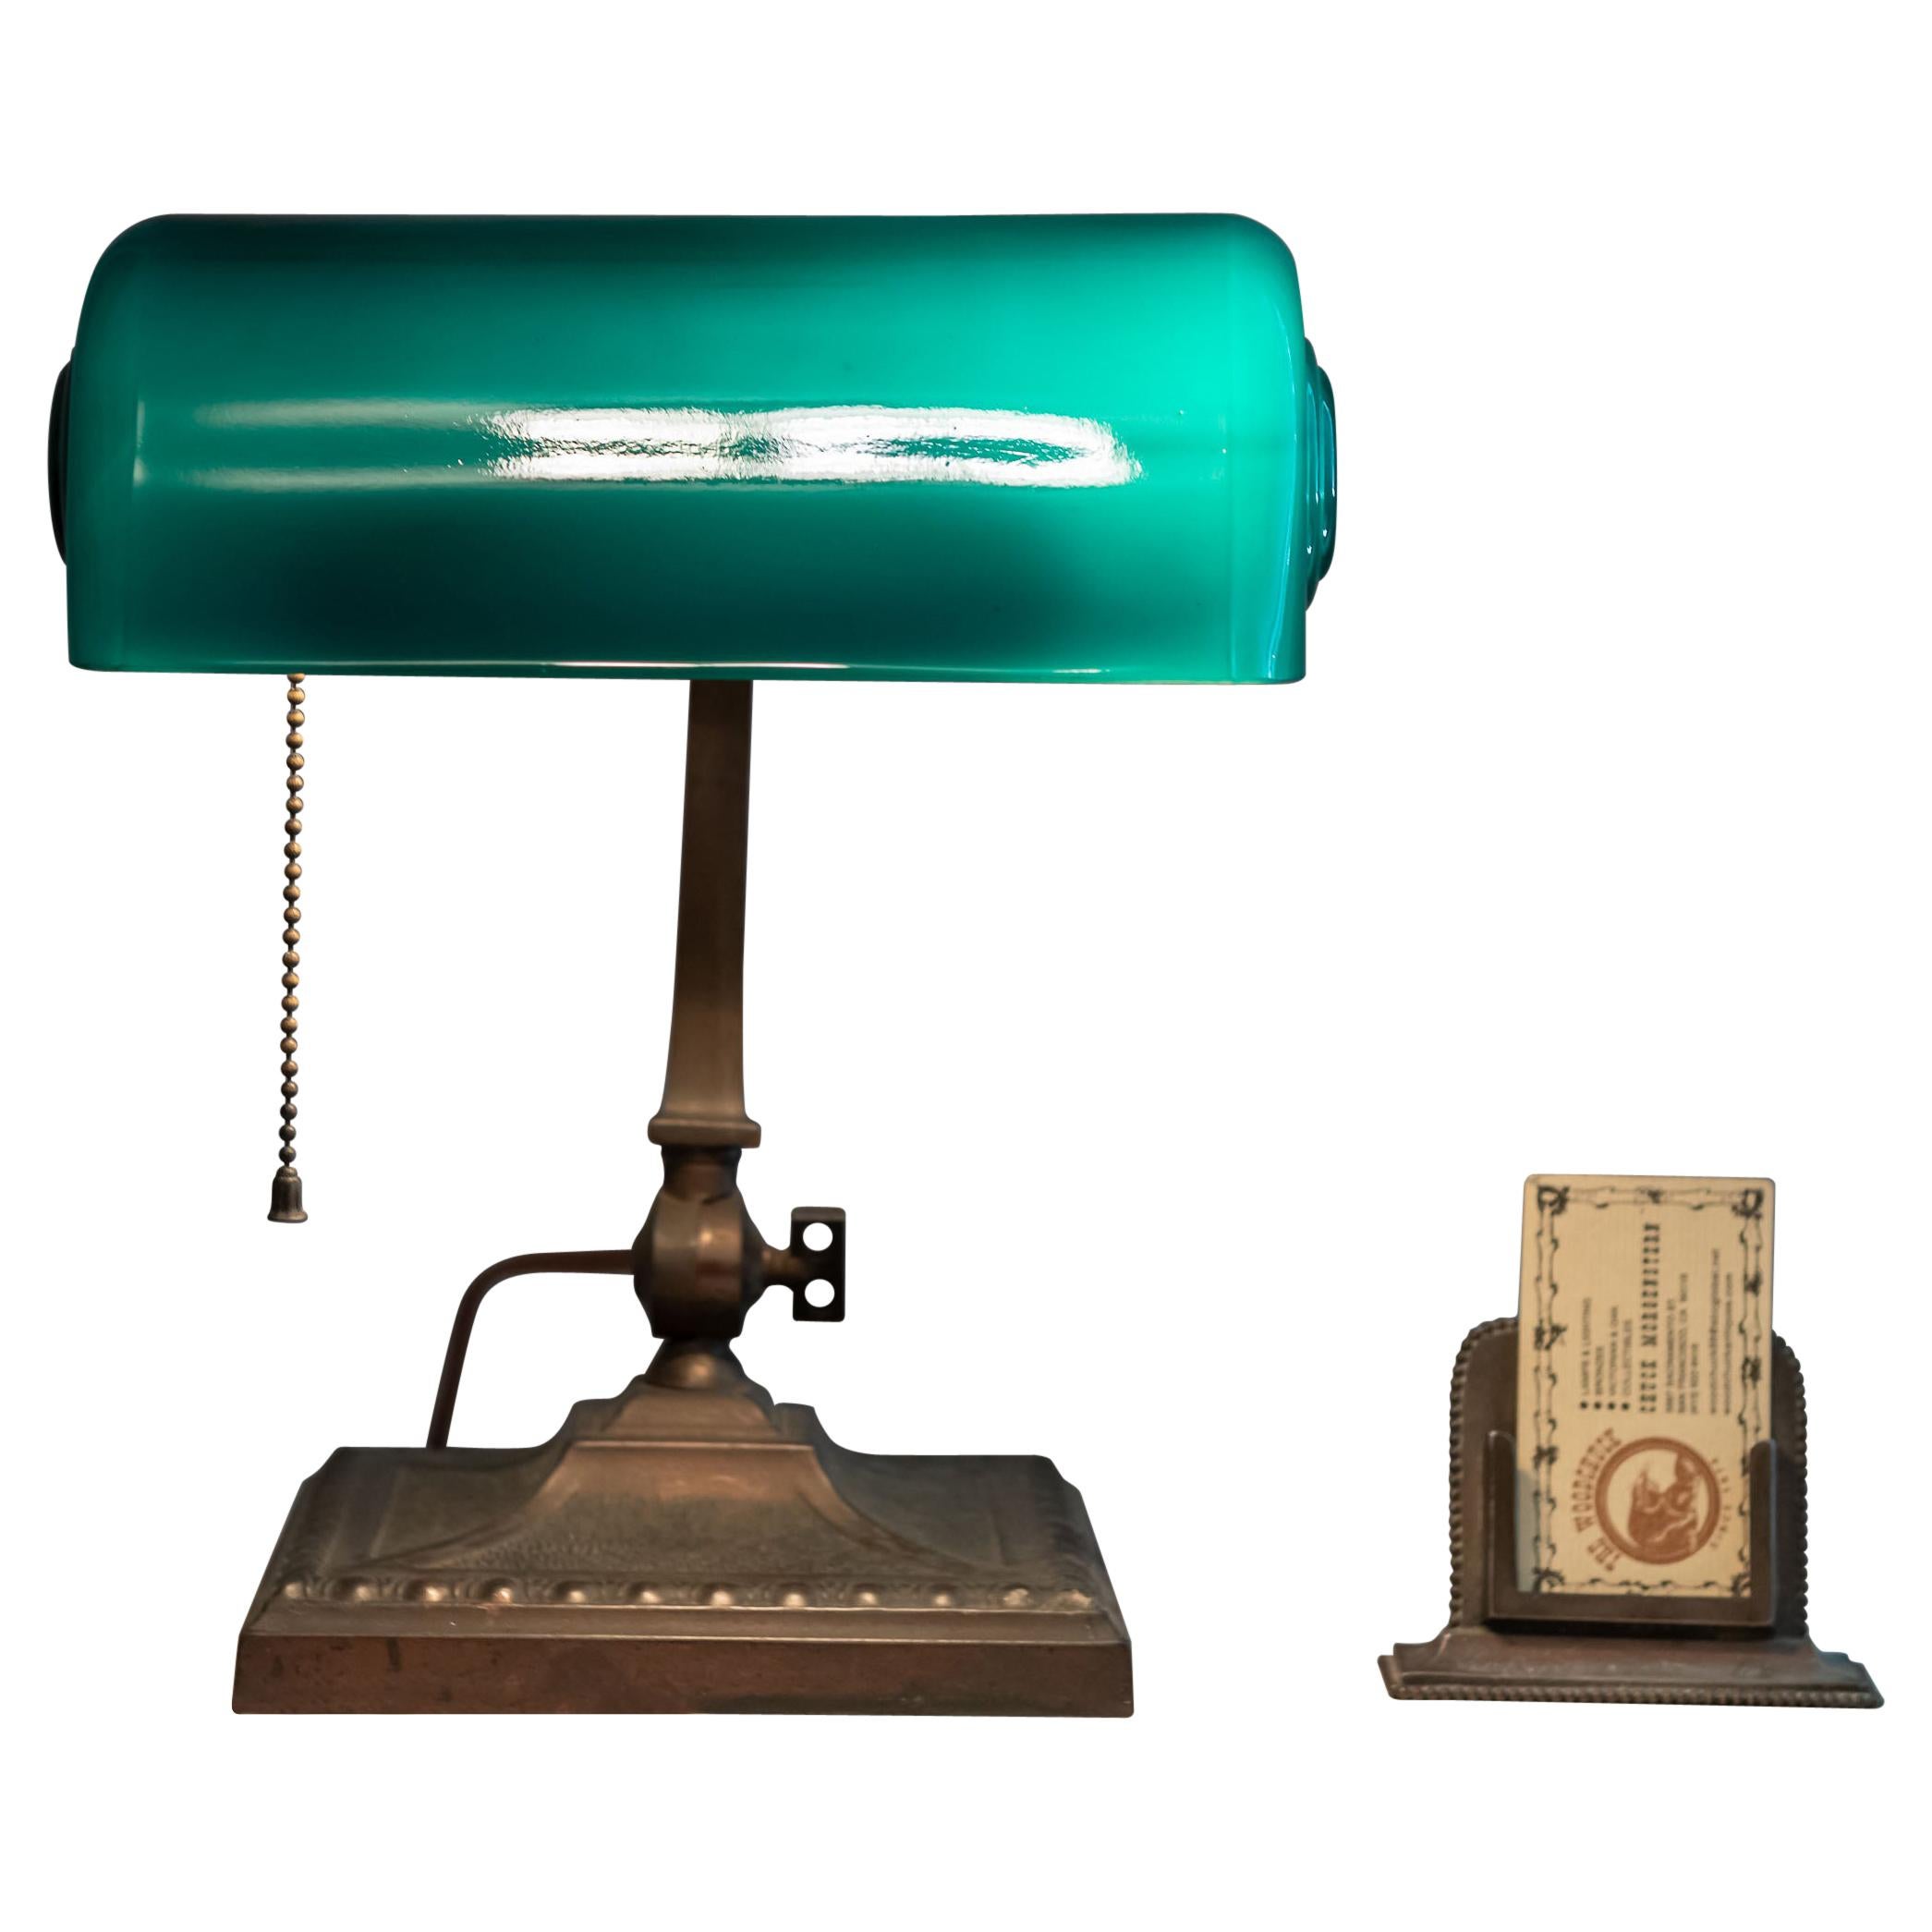 Green Shade Banker's Desk Lamp by Verdelite, ca. 1918